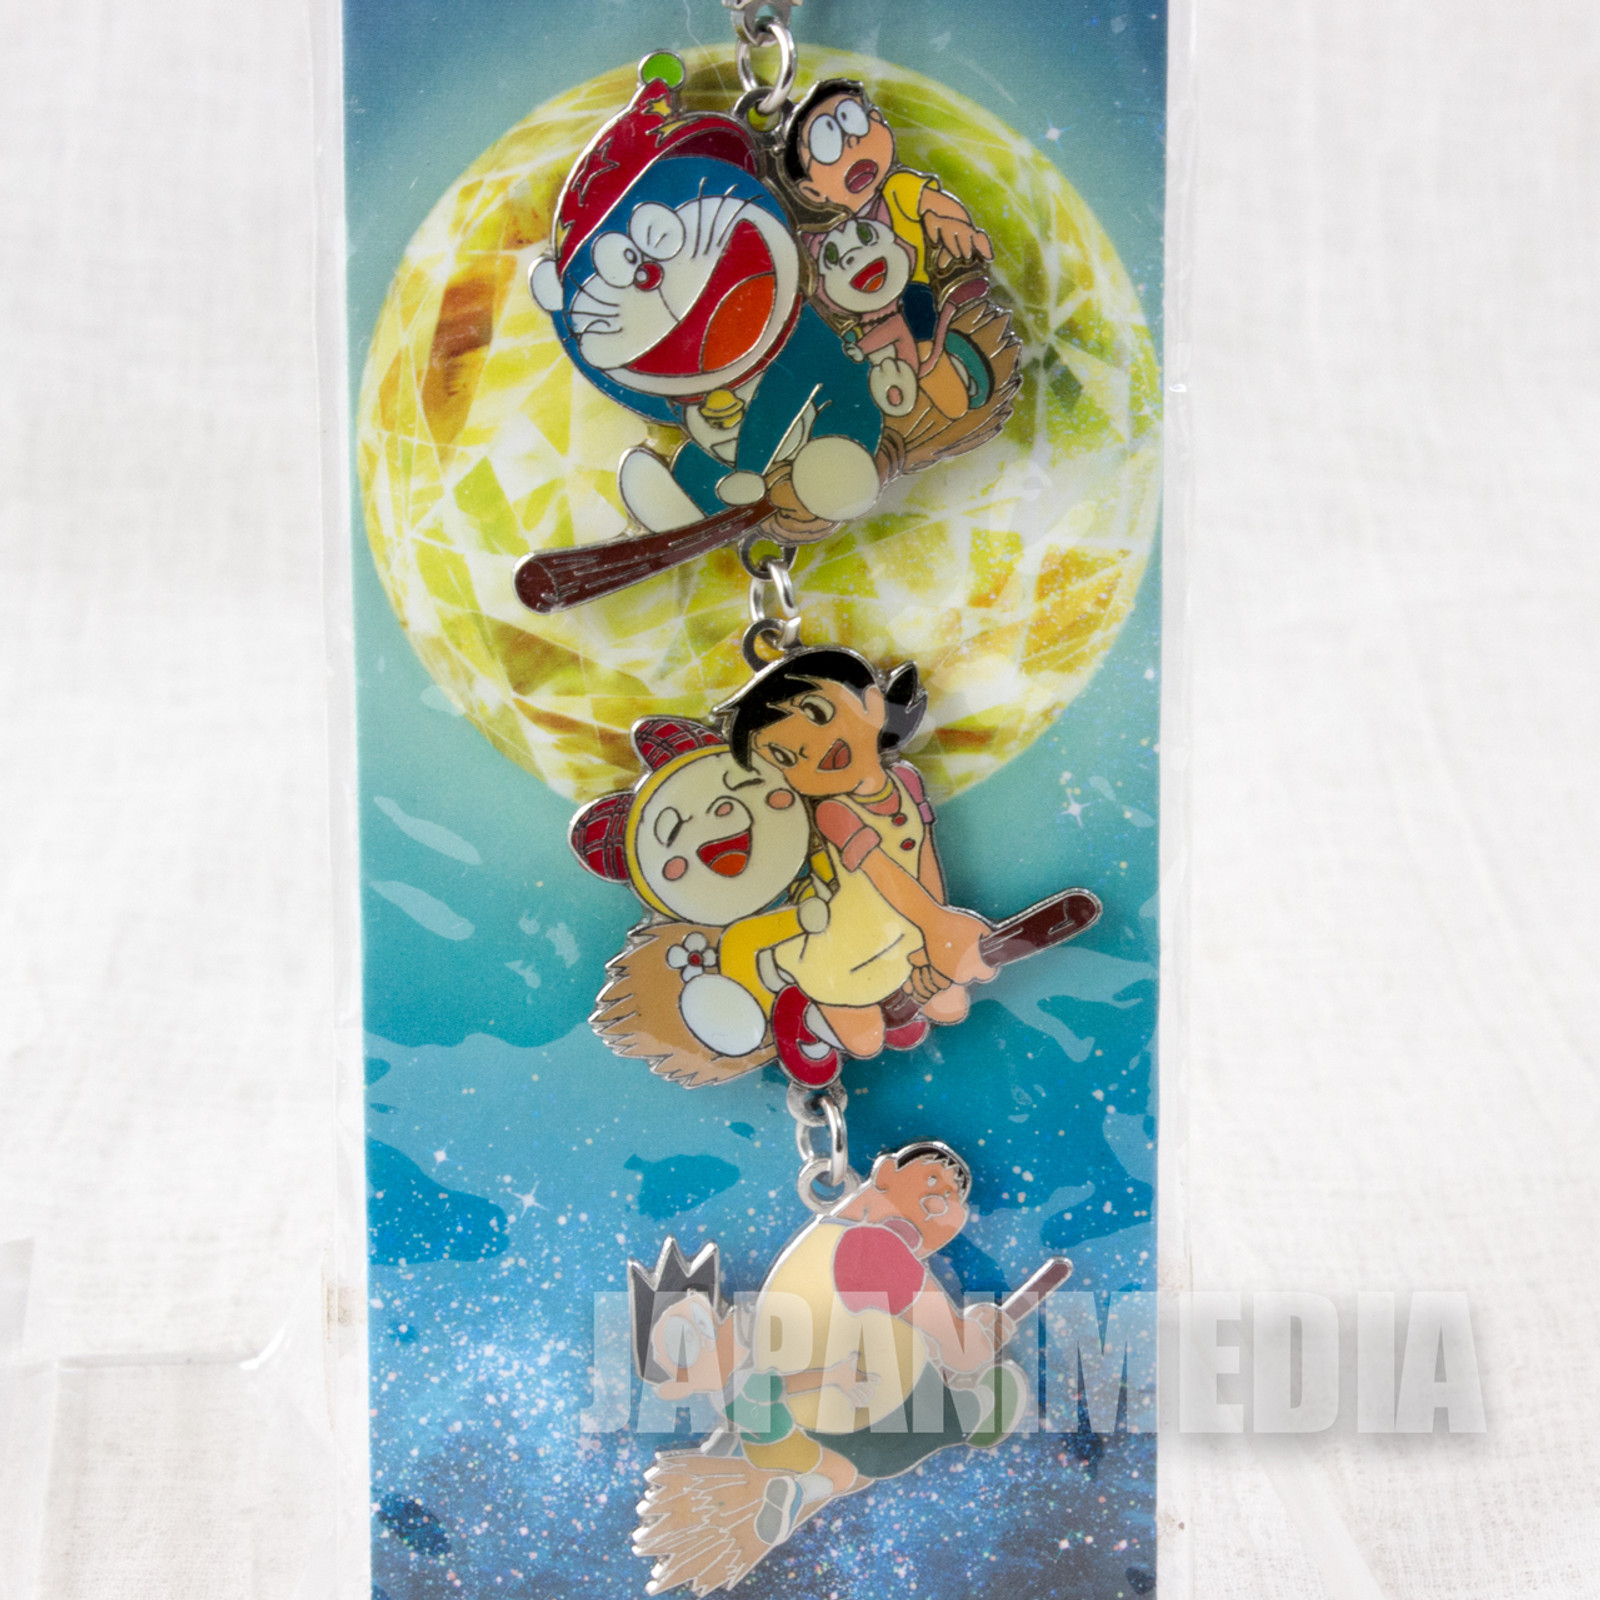 Download Doraemon And Nobita Poster Wallpaper | Wallpapers.com